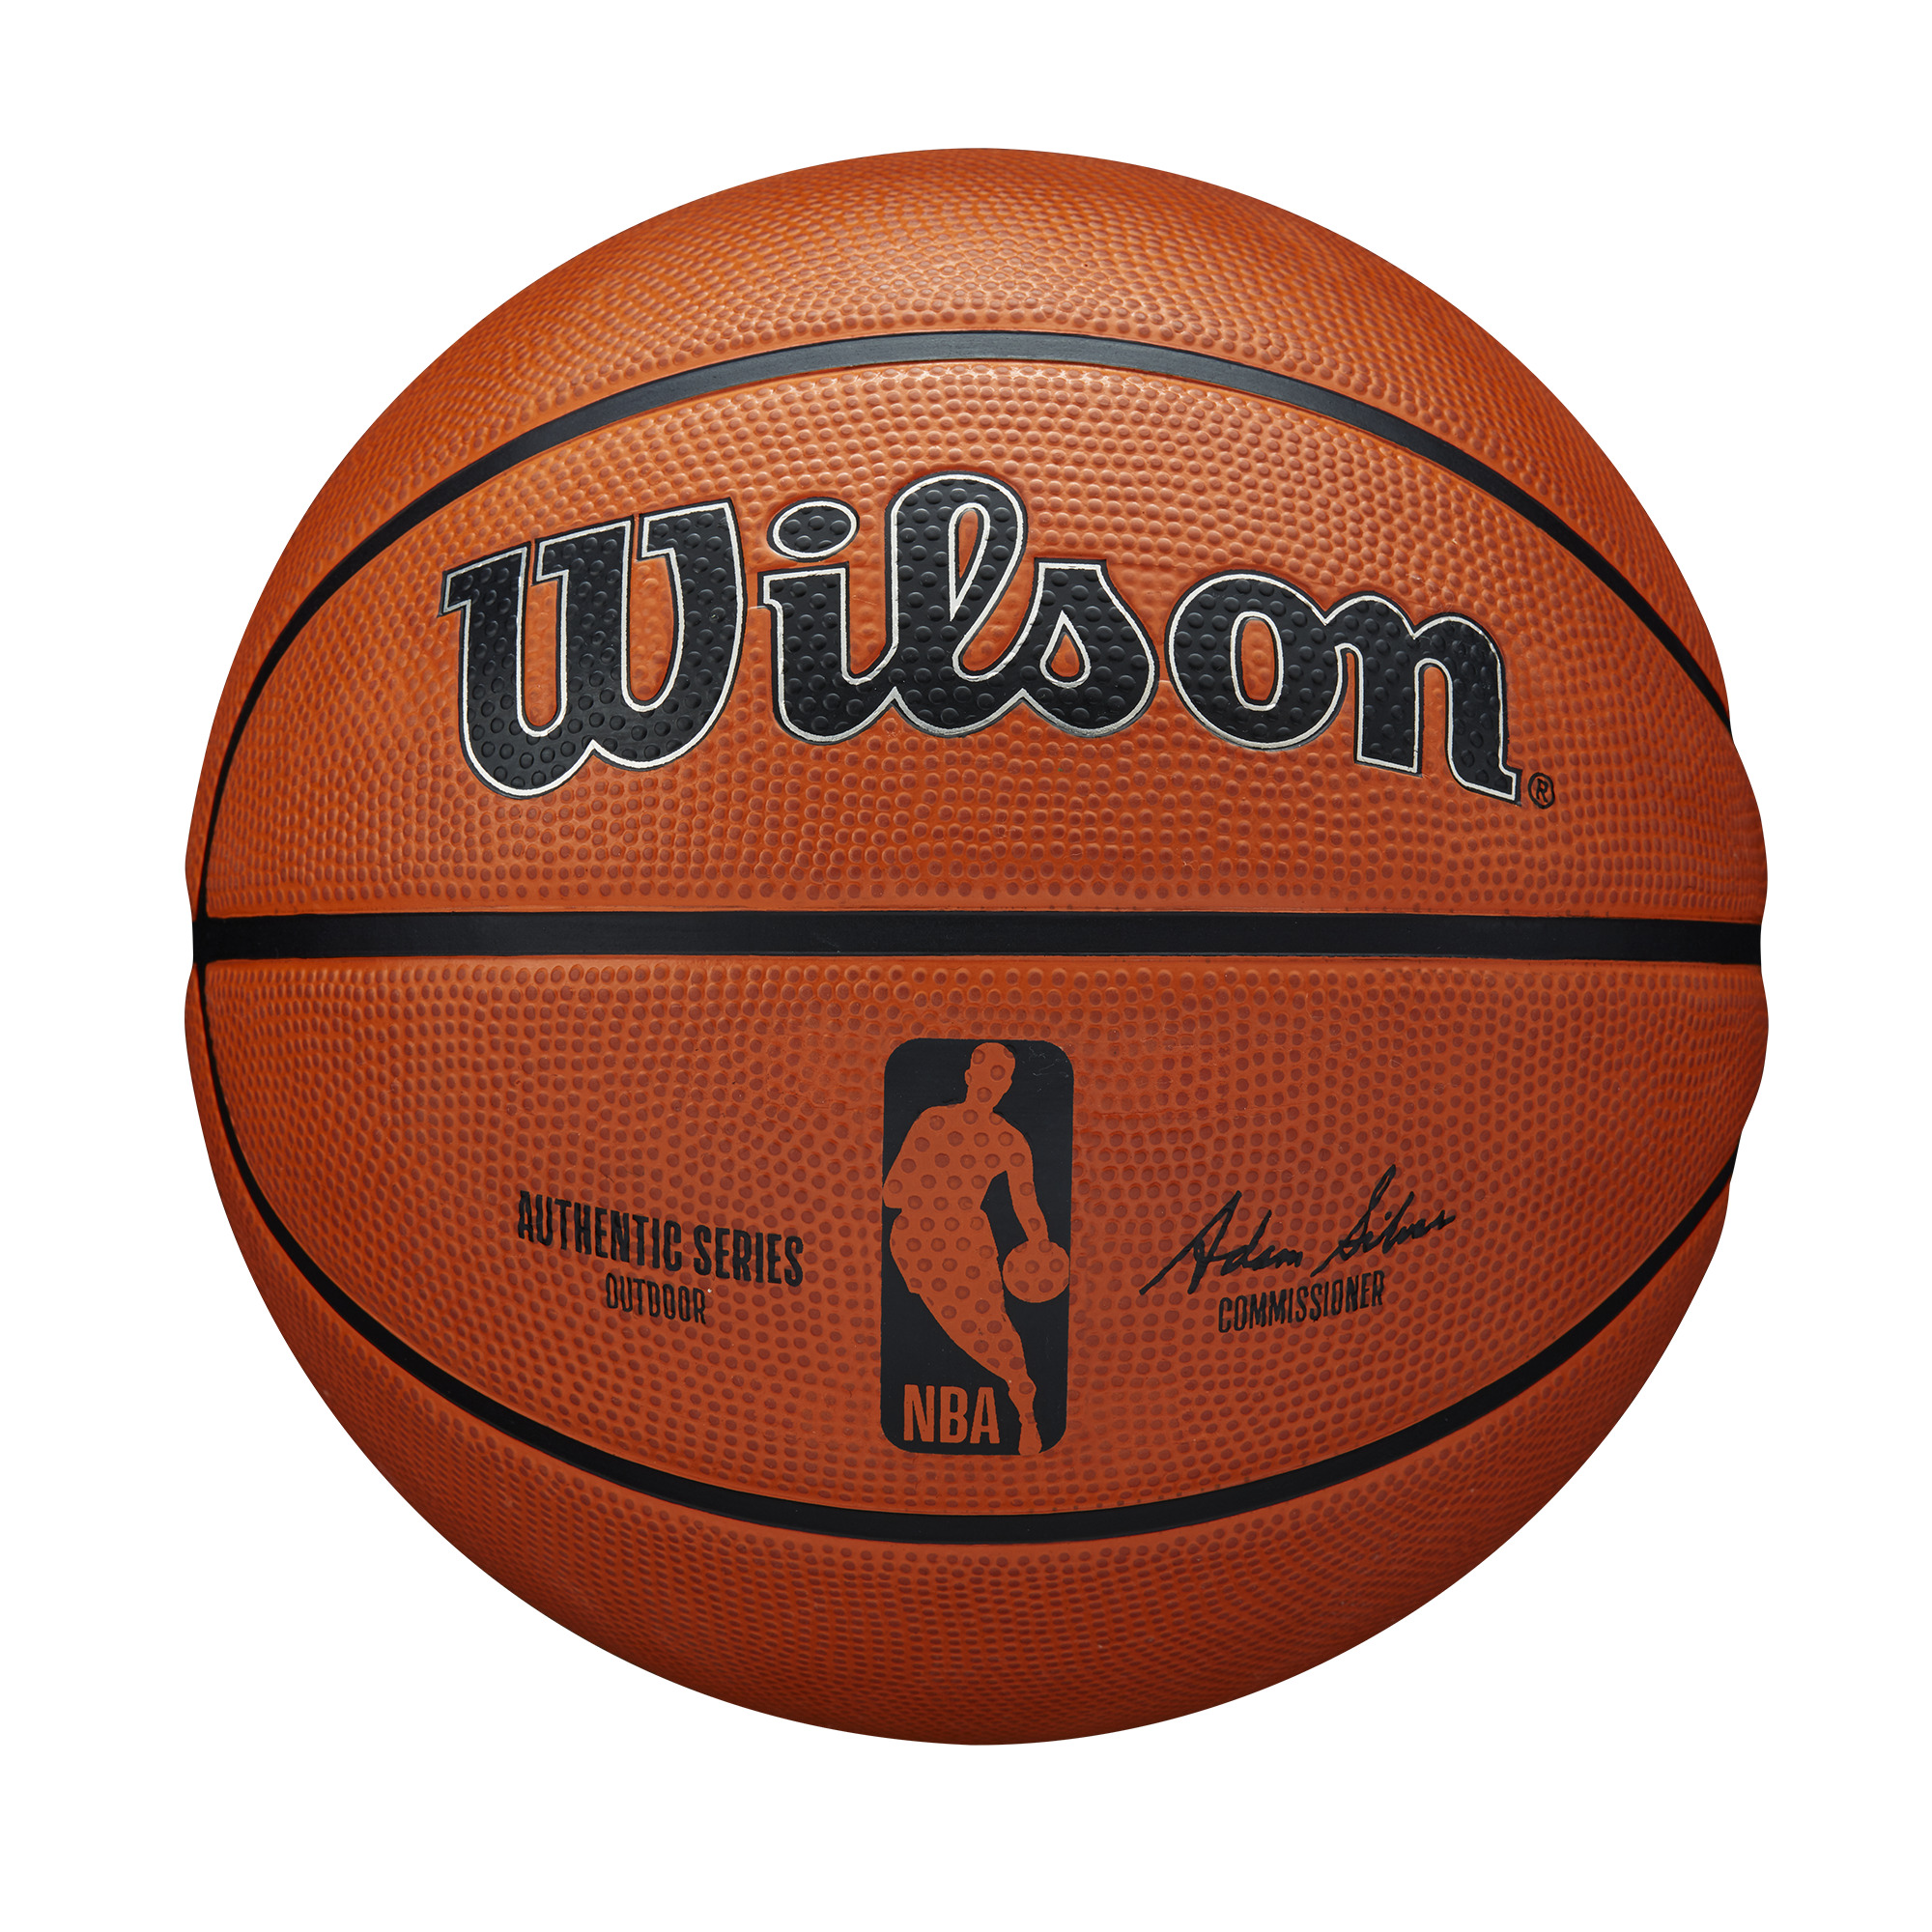 WILSON basketbola bumba NBA Authentic series WTB7300XB07 bumba